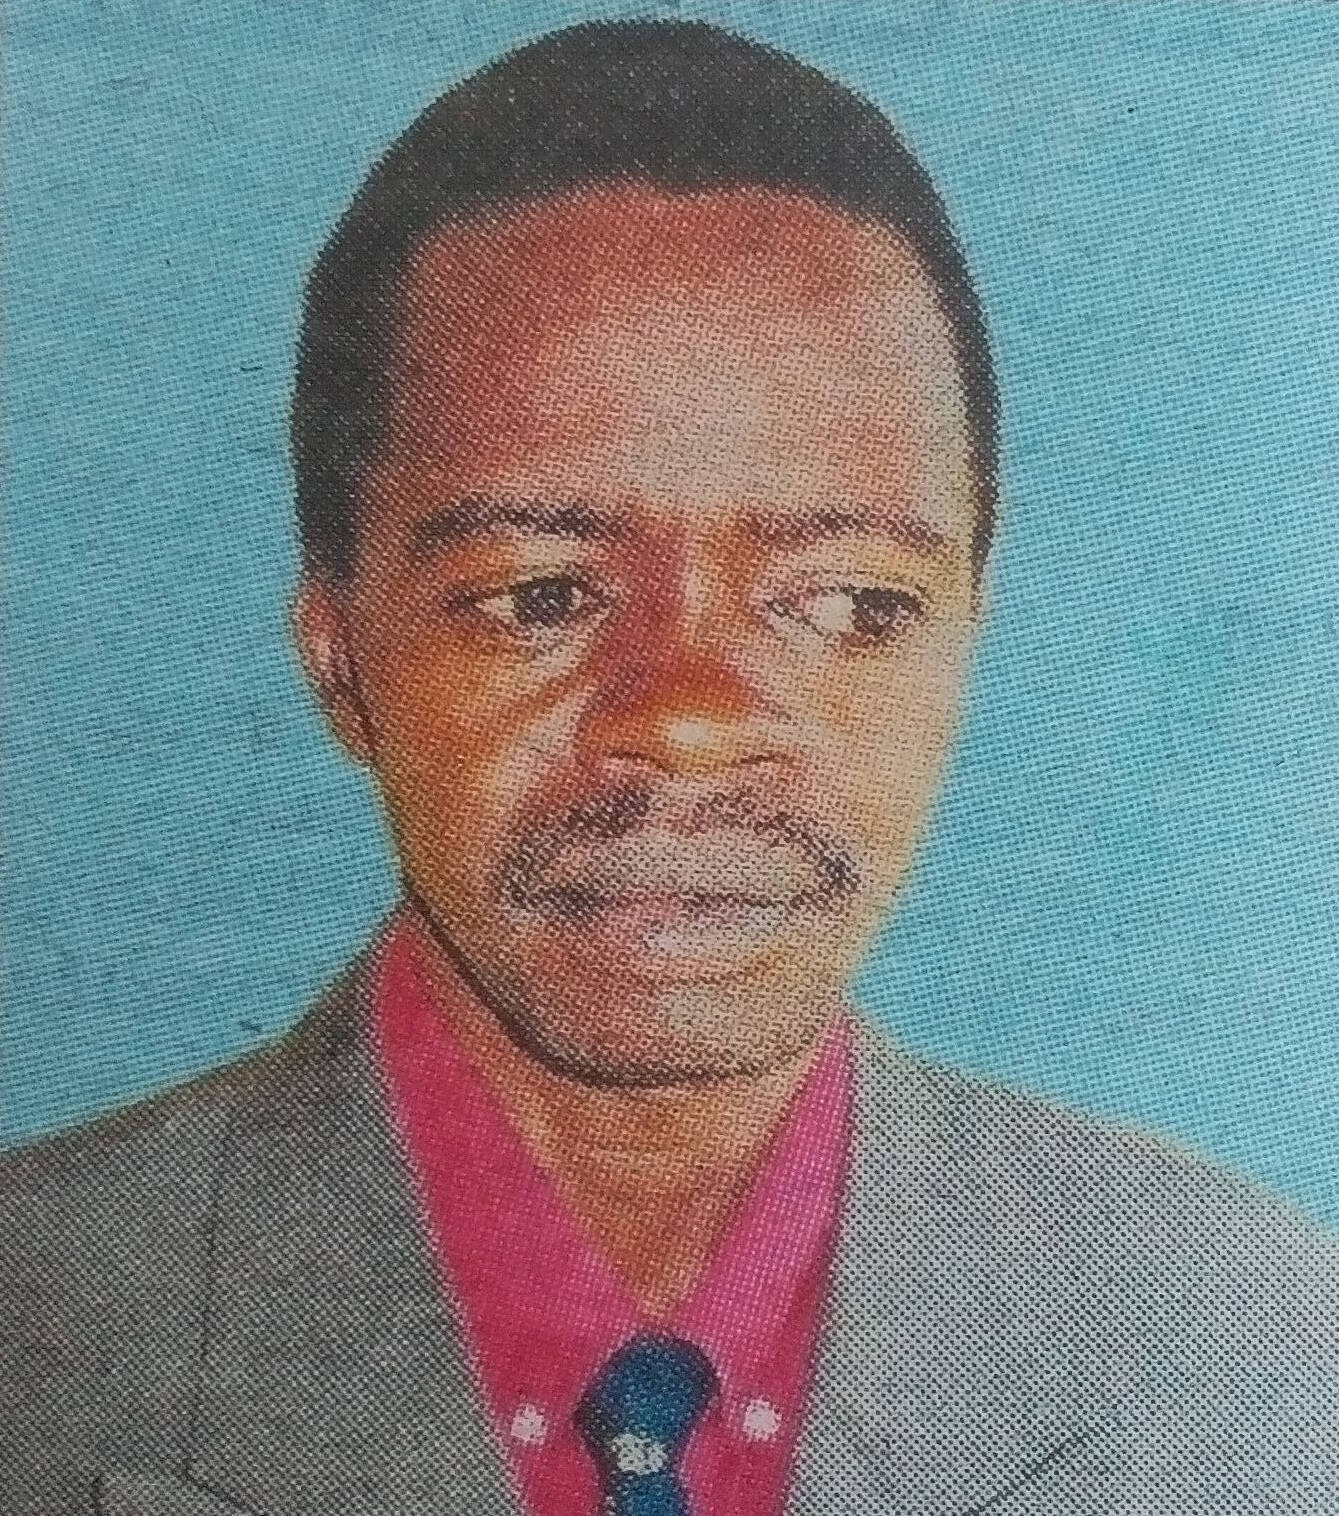 Obituary Image of Joseph Njeru Njagi